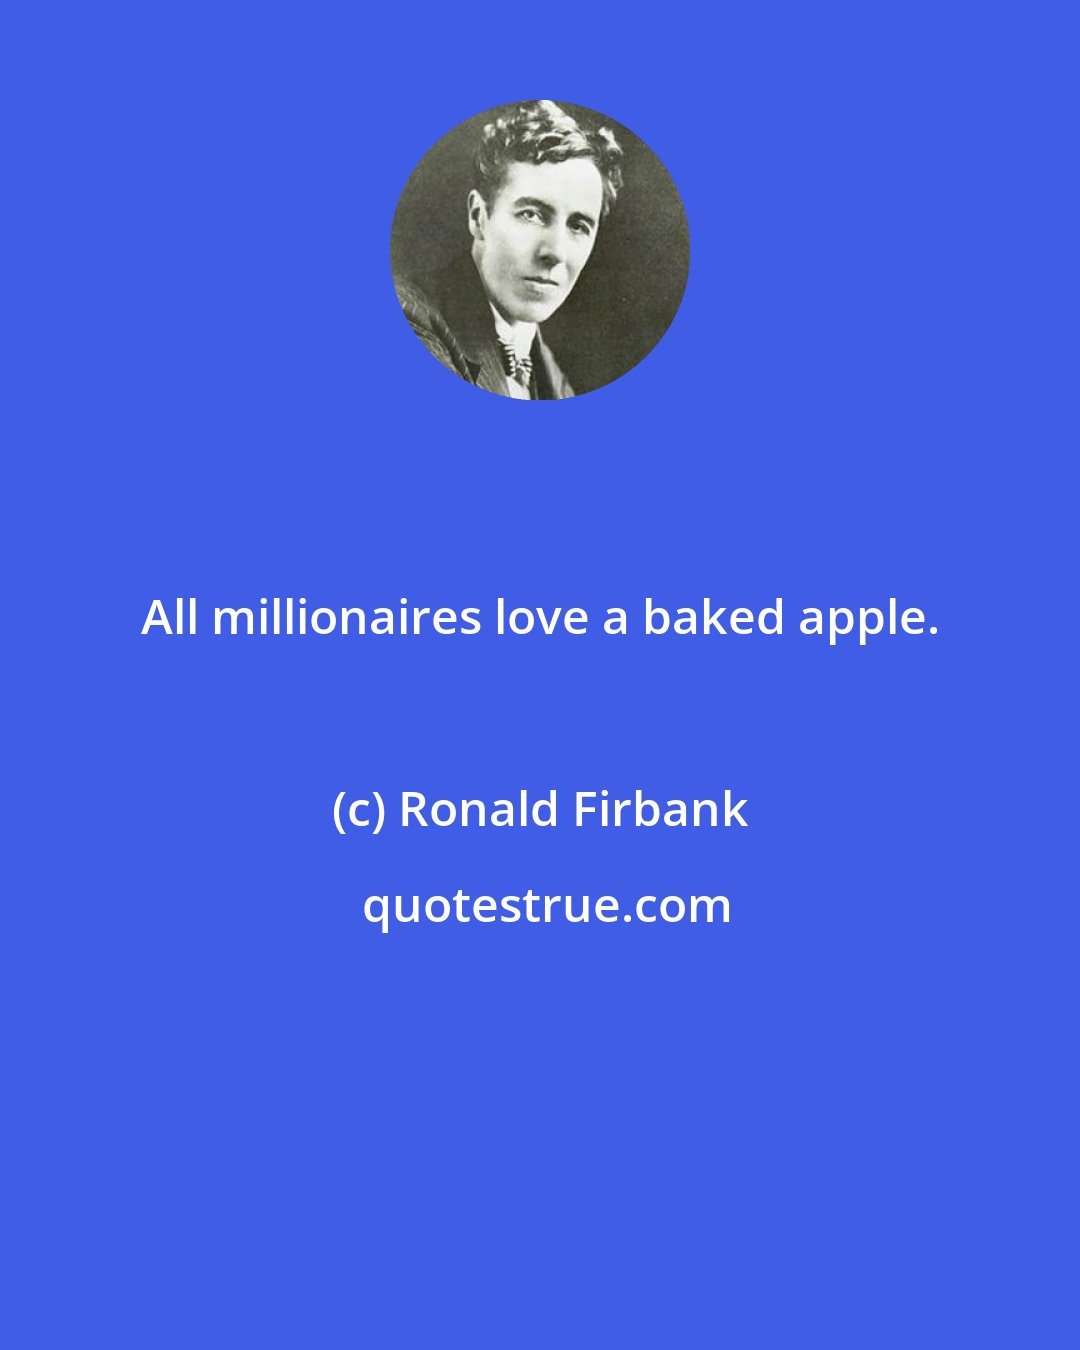 Ronald Firbank: All millionaires love a baked apple.